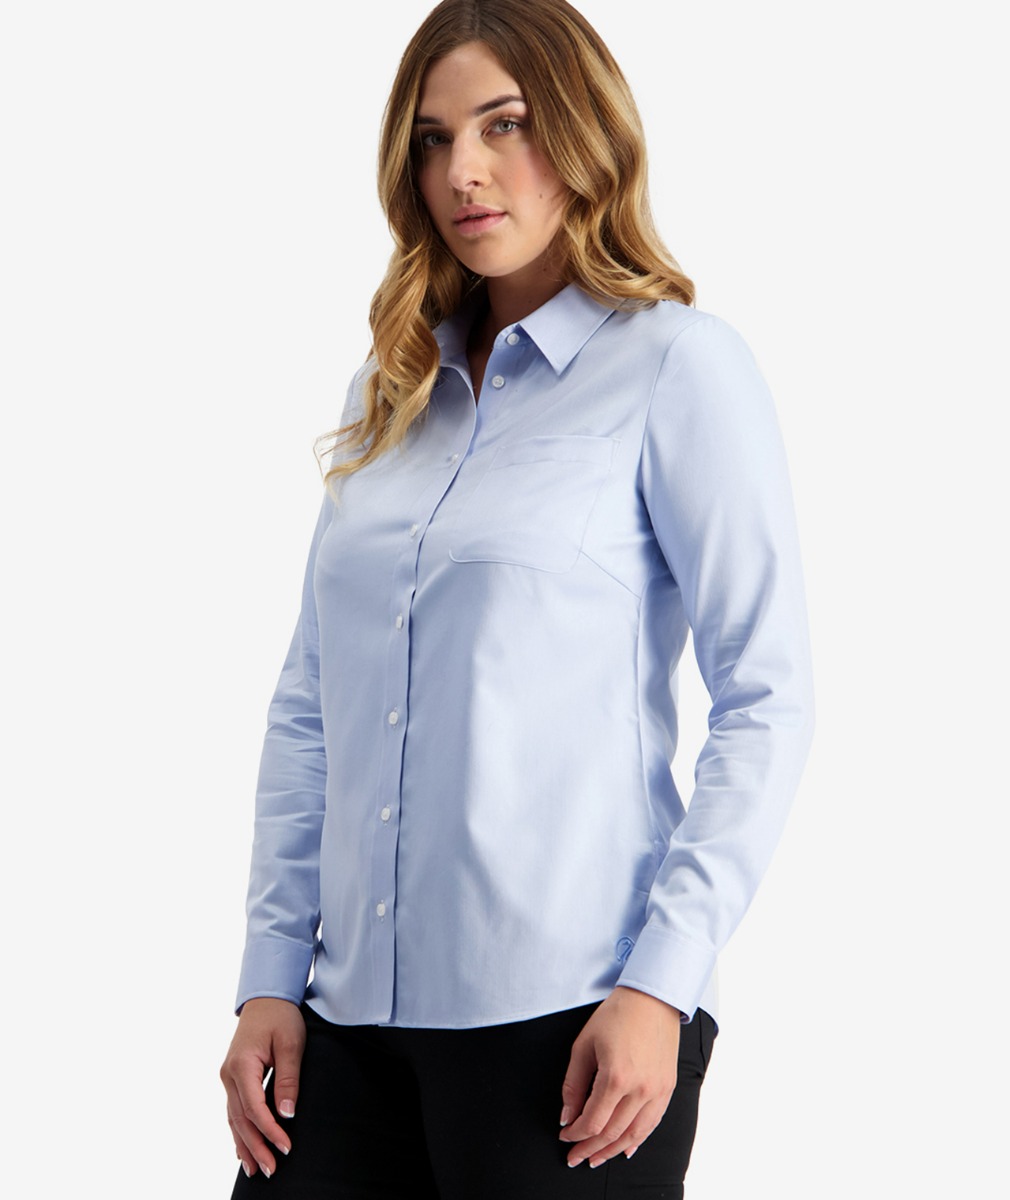 Women's Avondale Long Sleeve Shirt